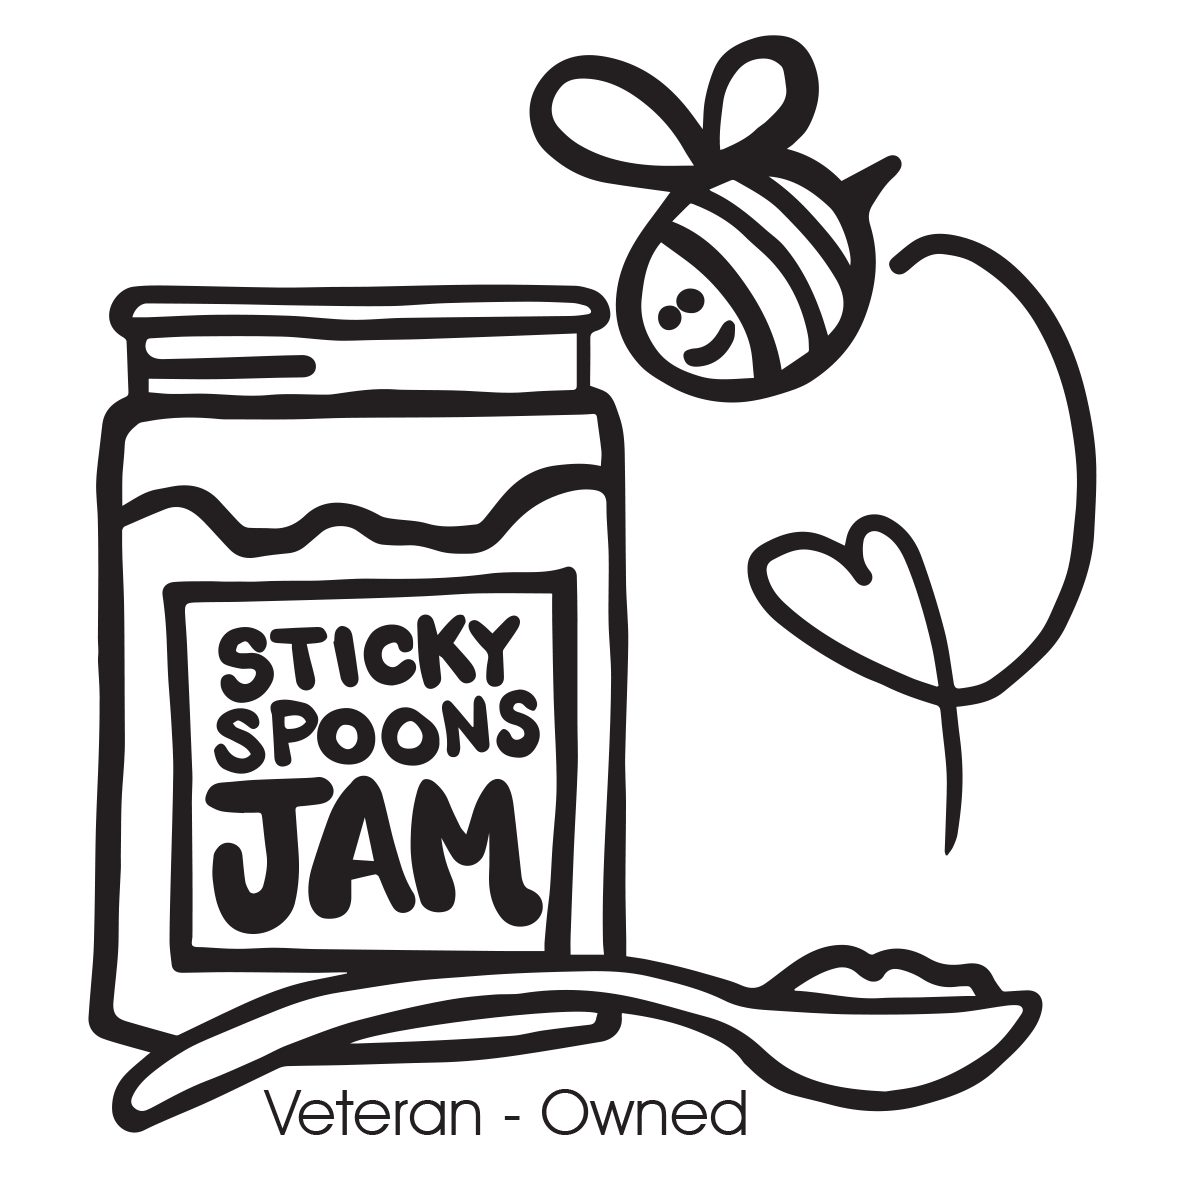 Sticky Spoons Jam, LLC Logo